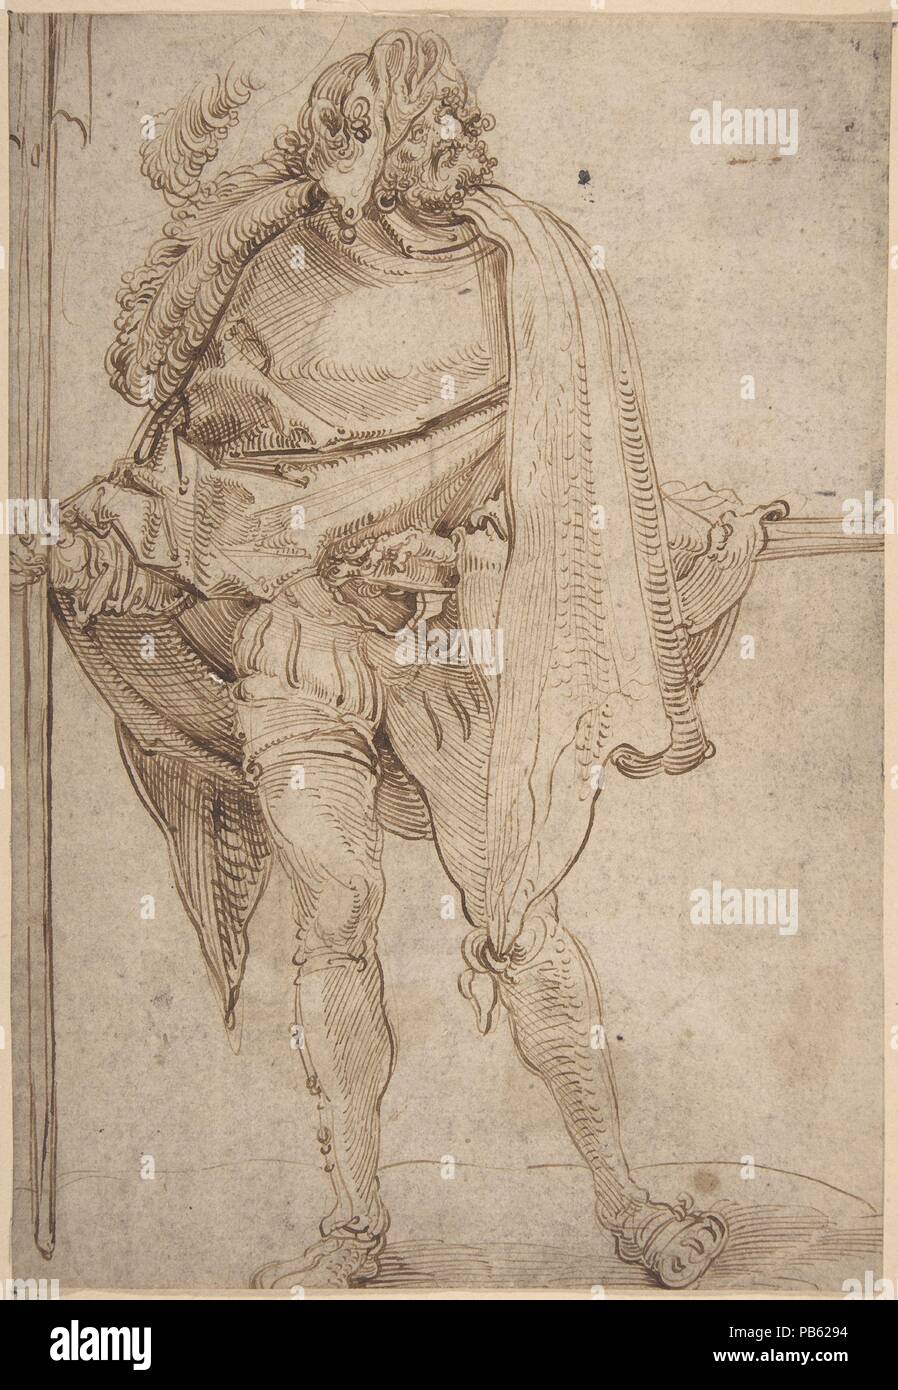 Landsknecht. Artist: Hans Schäufelein (German, Nuremberg ca. 1480-ca. 1540 Nördlingen). Dimensions: sheet: 10 x 6 15/16 in. (25.4 x 17.6 cm). Date: early 16th century. Museum: Metropolitan Museum of Art, New York, USA. Stock Photo